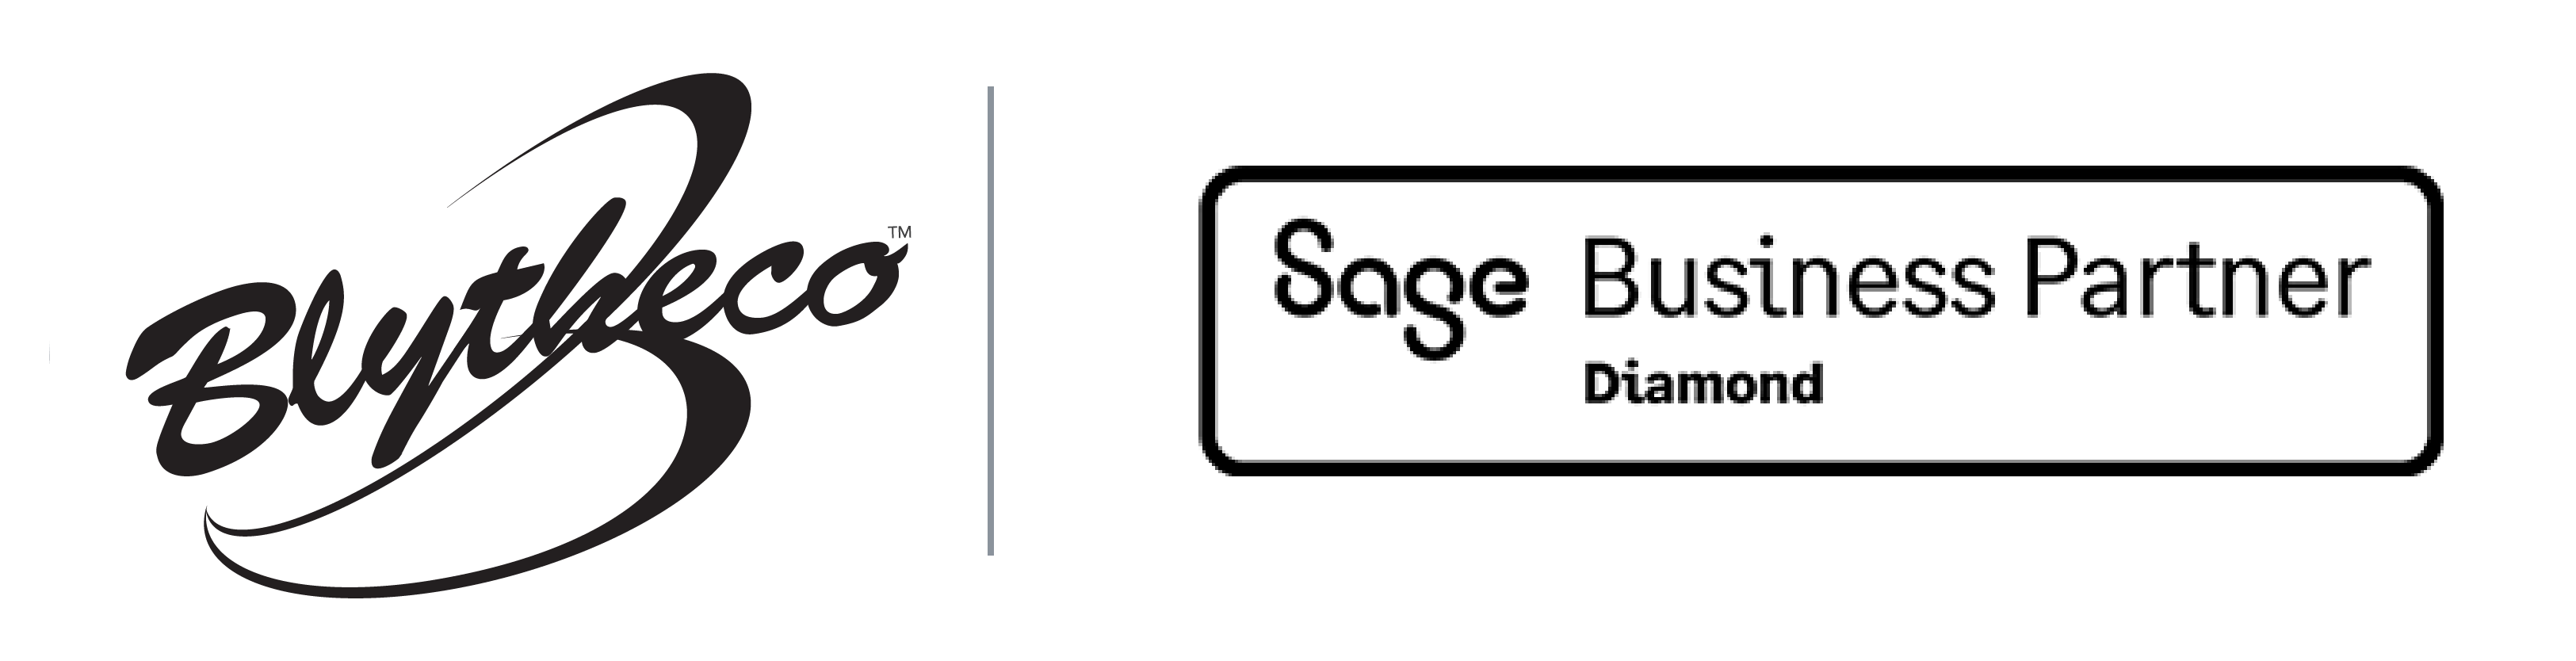 Sage Diamond Partner